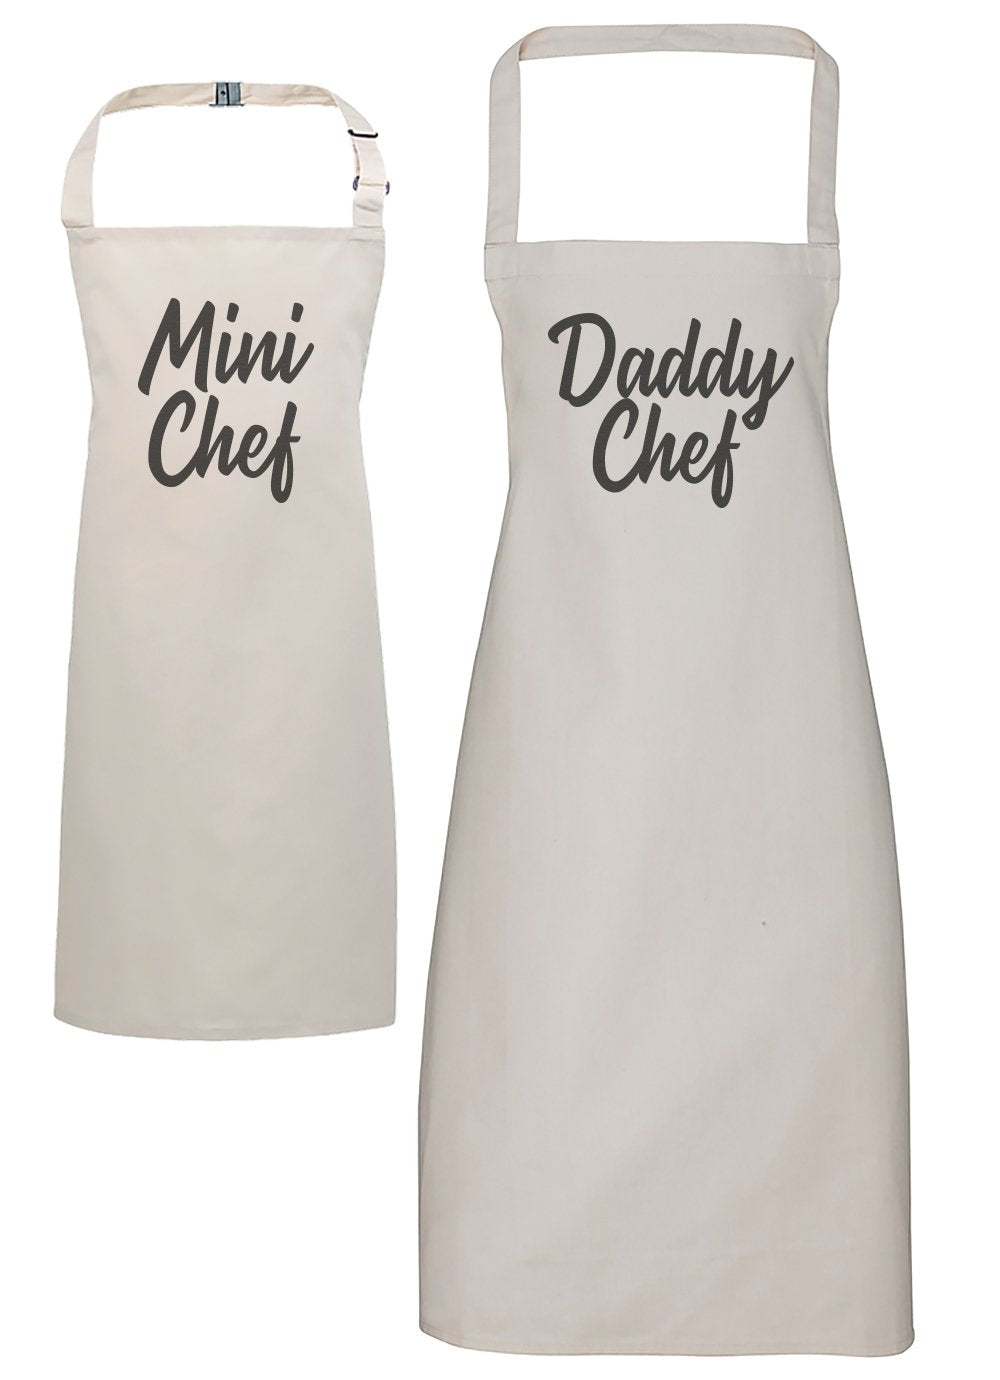 Daddy Chef & Mini Chef - Mens & Kids Apron Set (4784722346033)